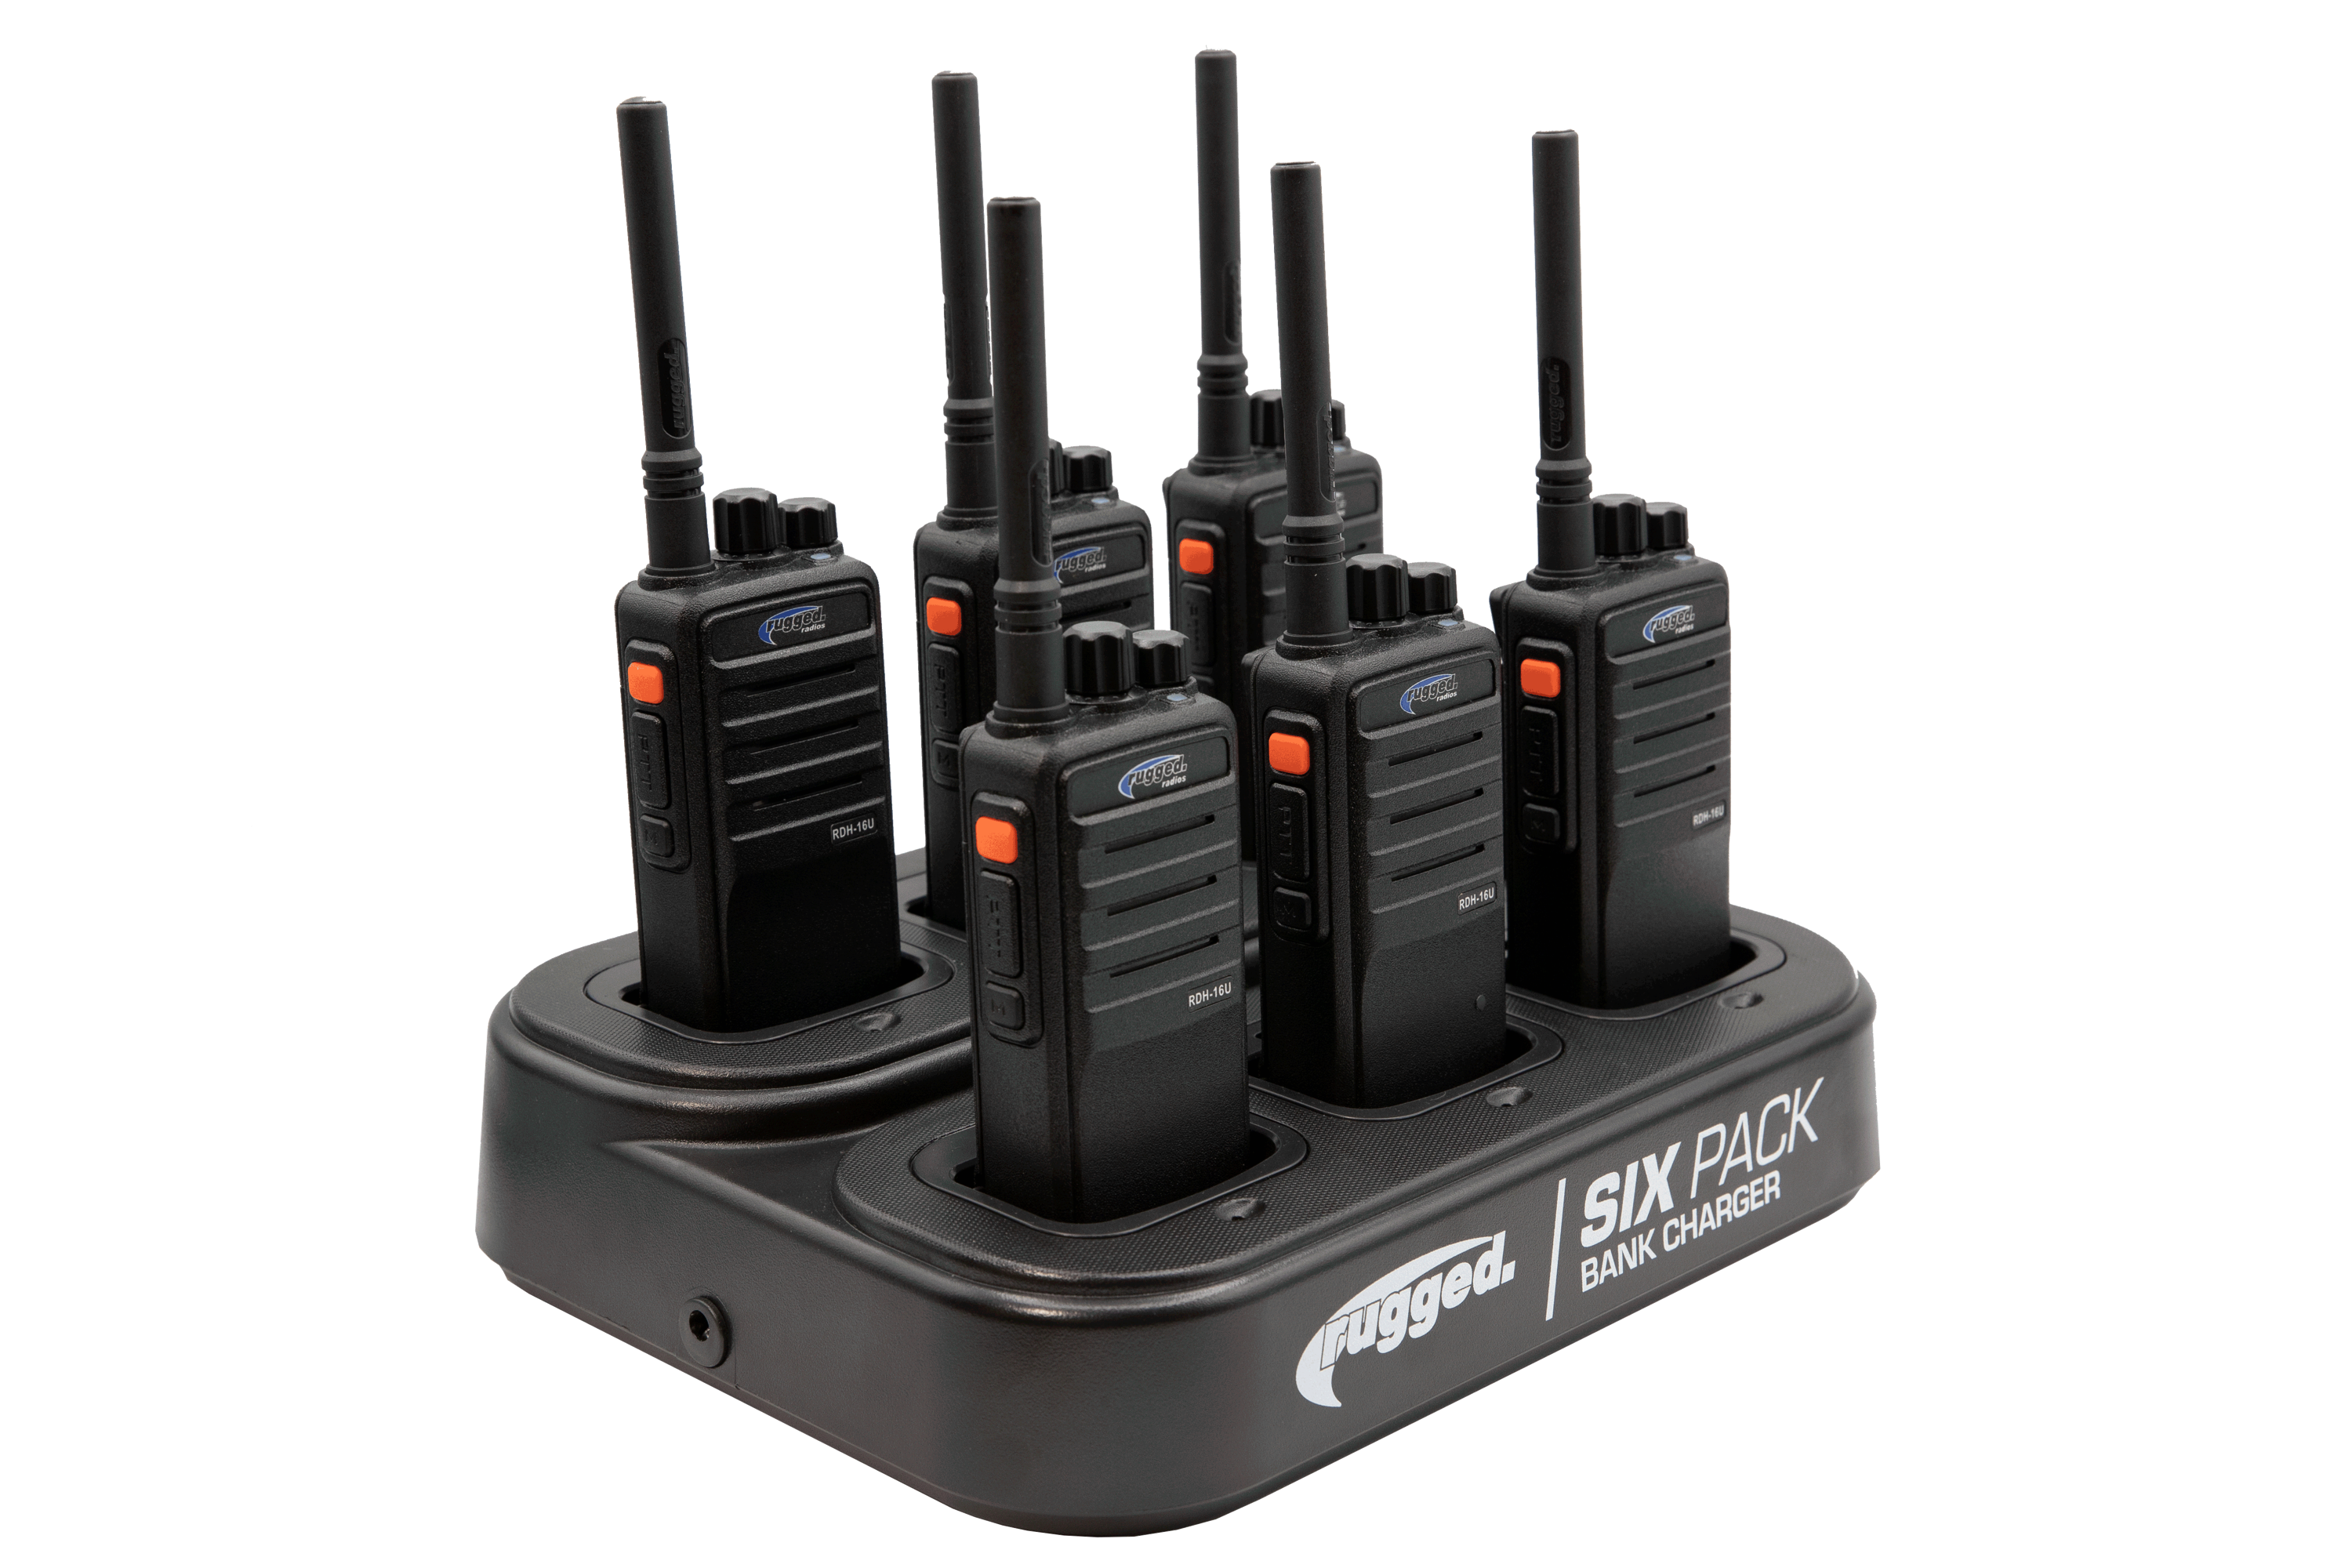 6-pack bank charger two-way radios or walkie-talkies